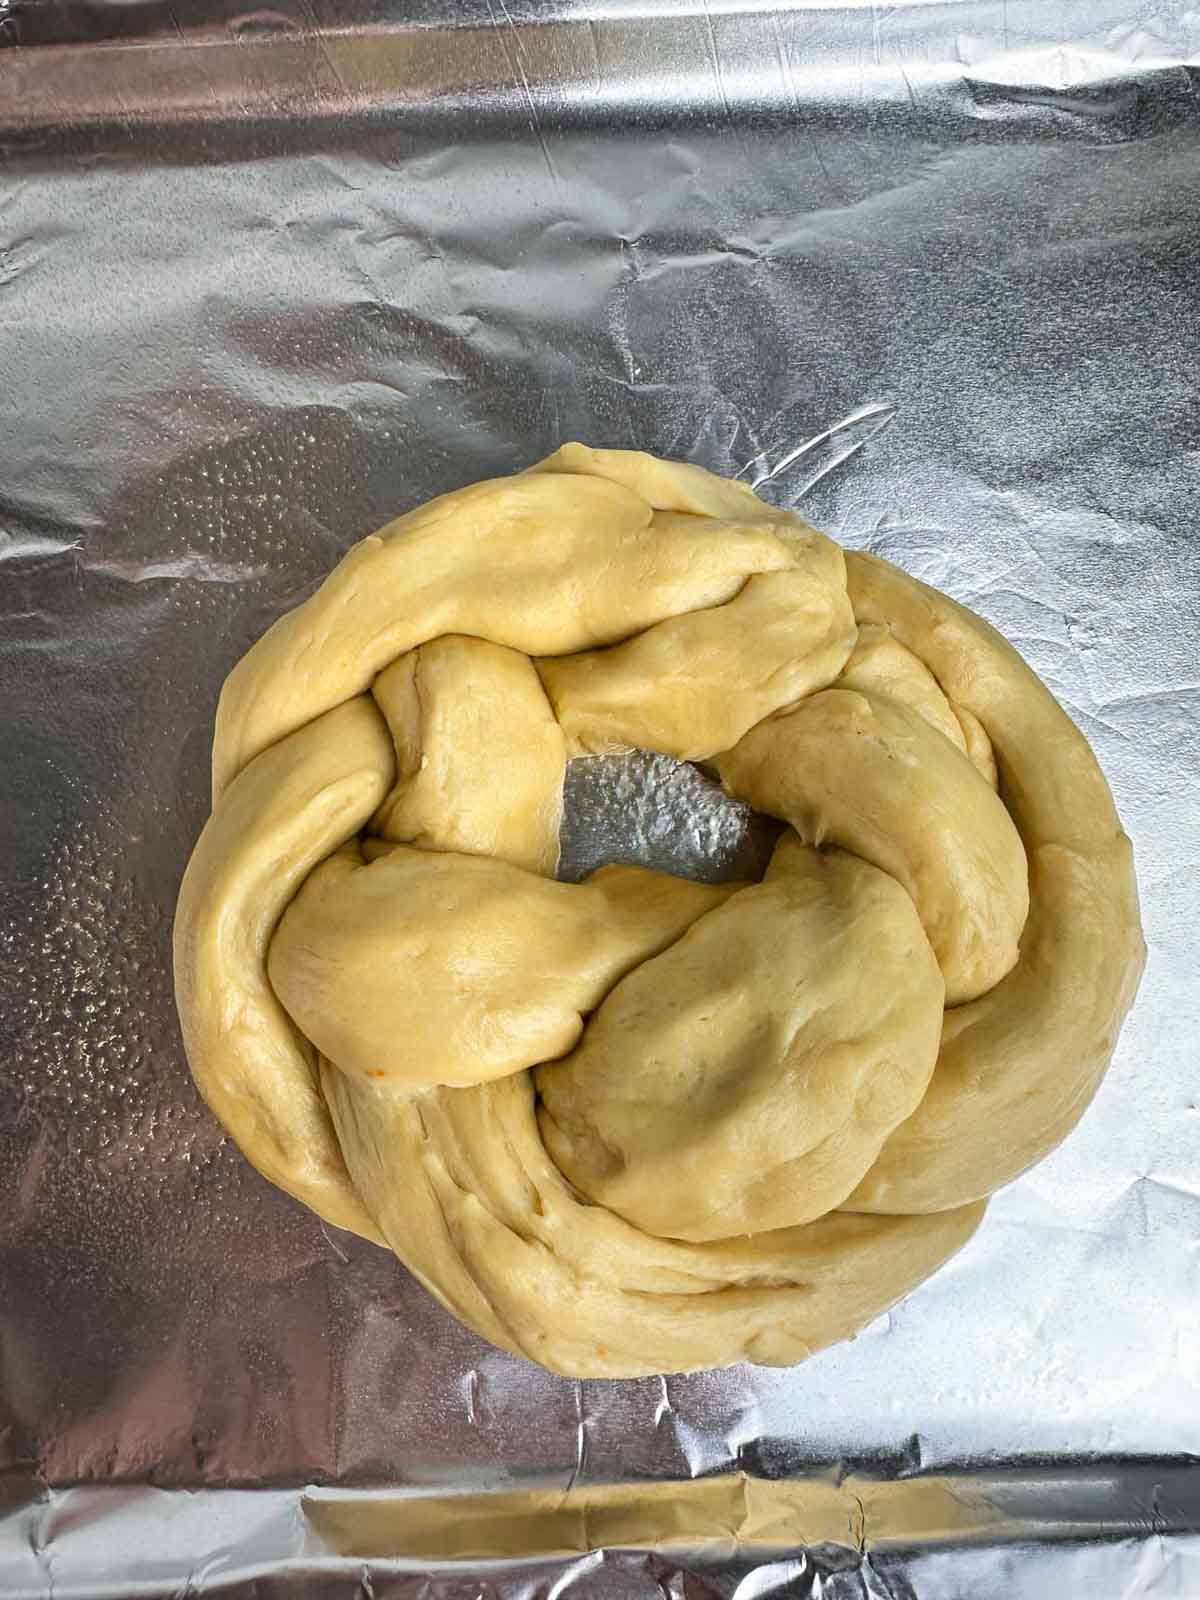 Shape the braided bread into a wreath shape.